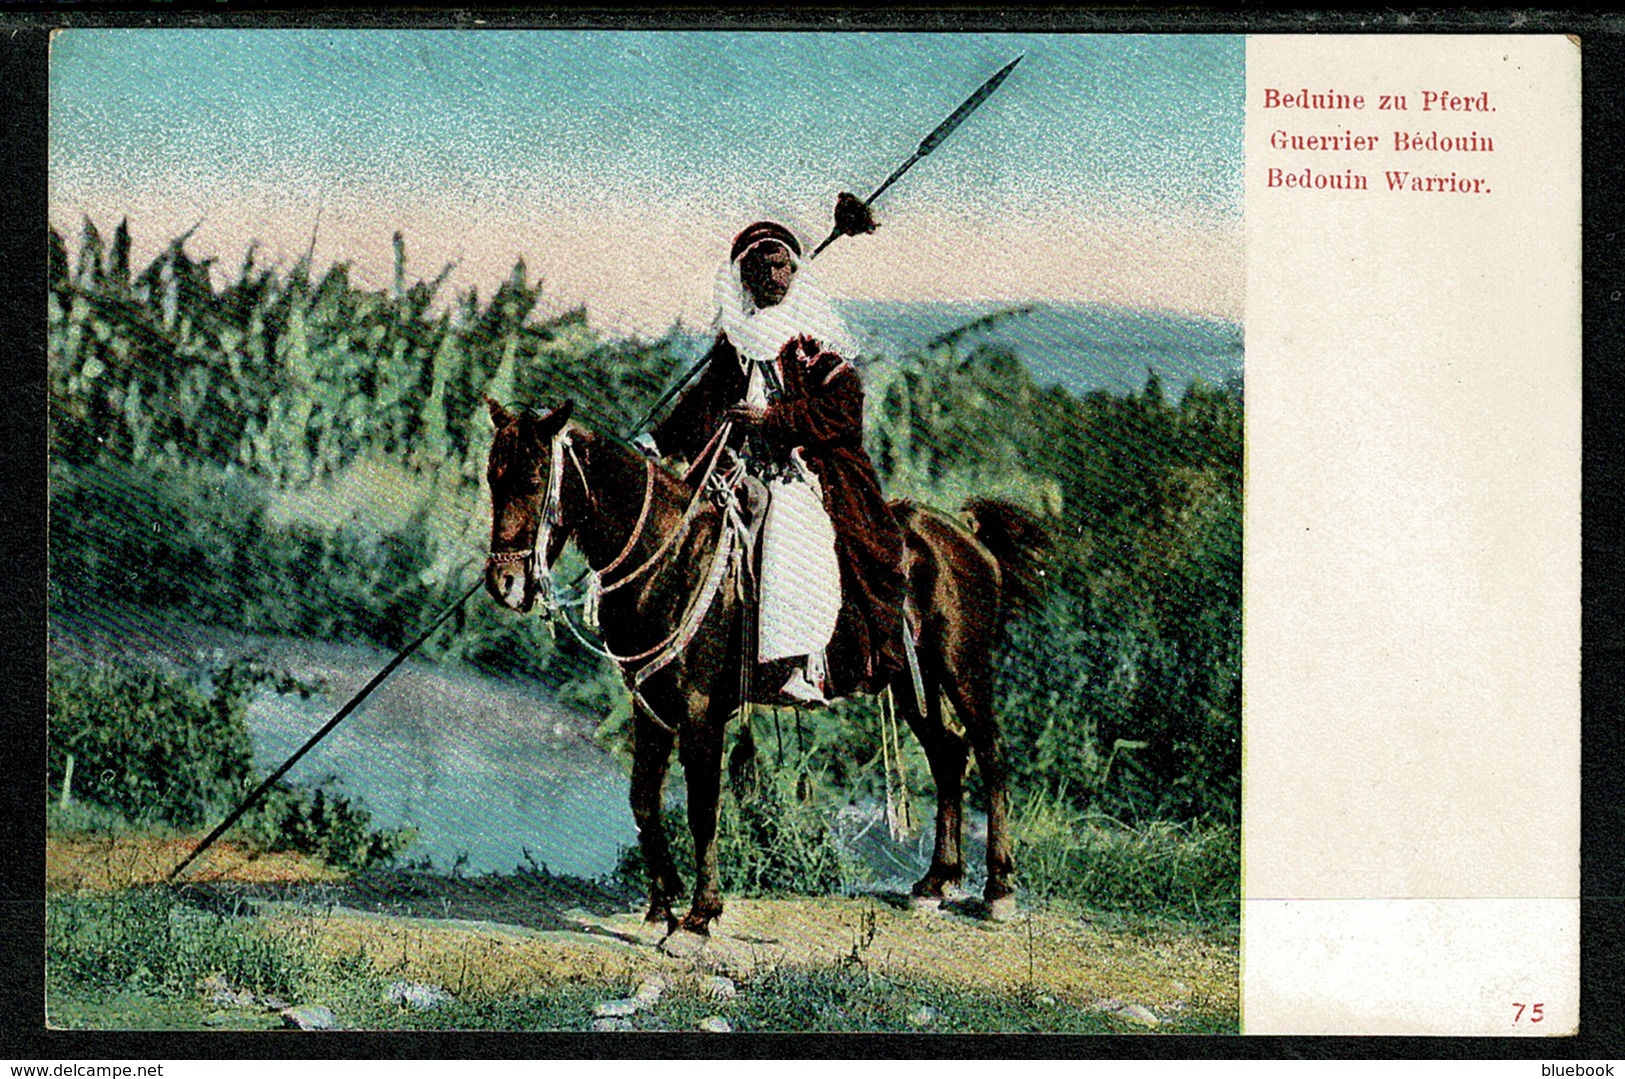 Ref 1308 - Early Ethnic Postcard - Bedouin Warrior On Horseback - Africa